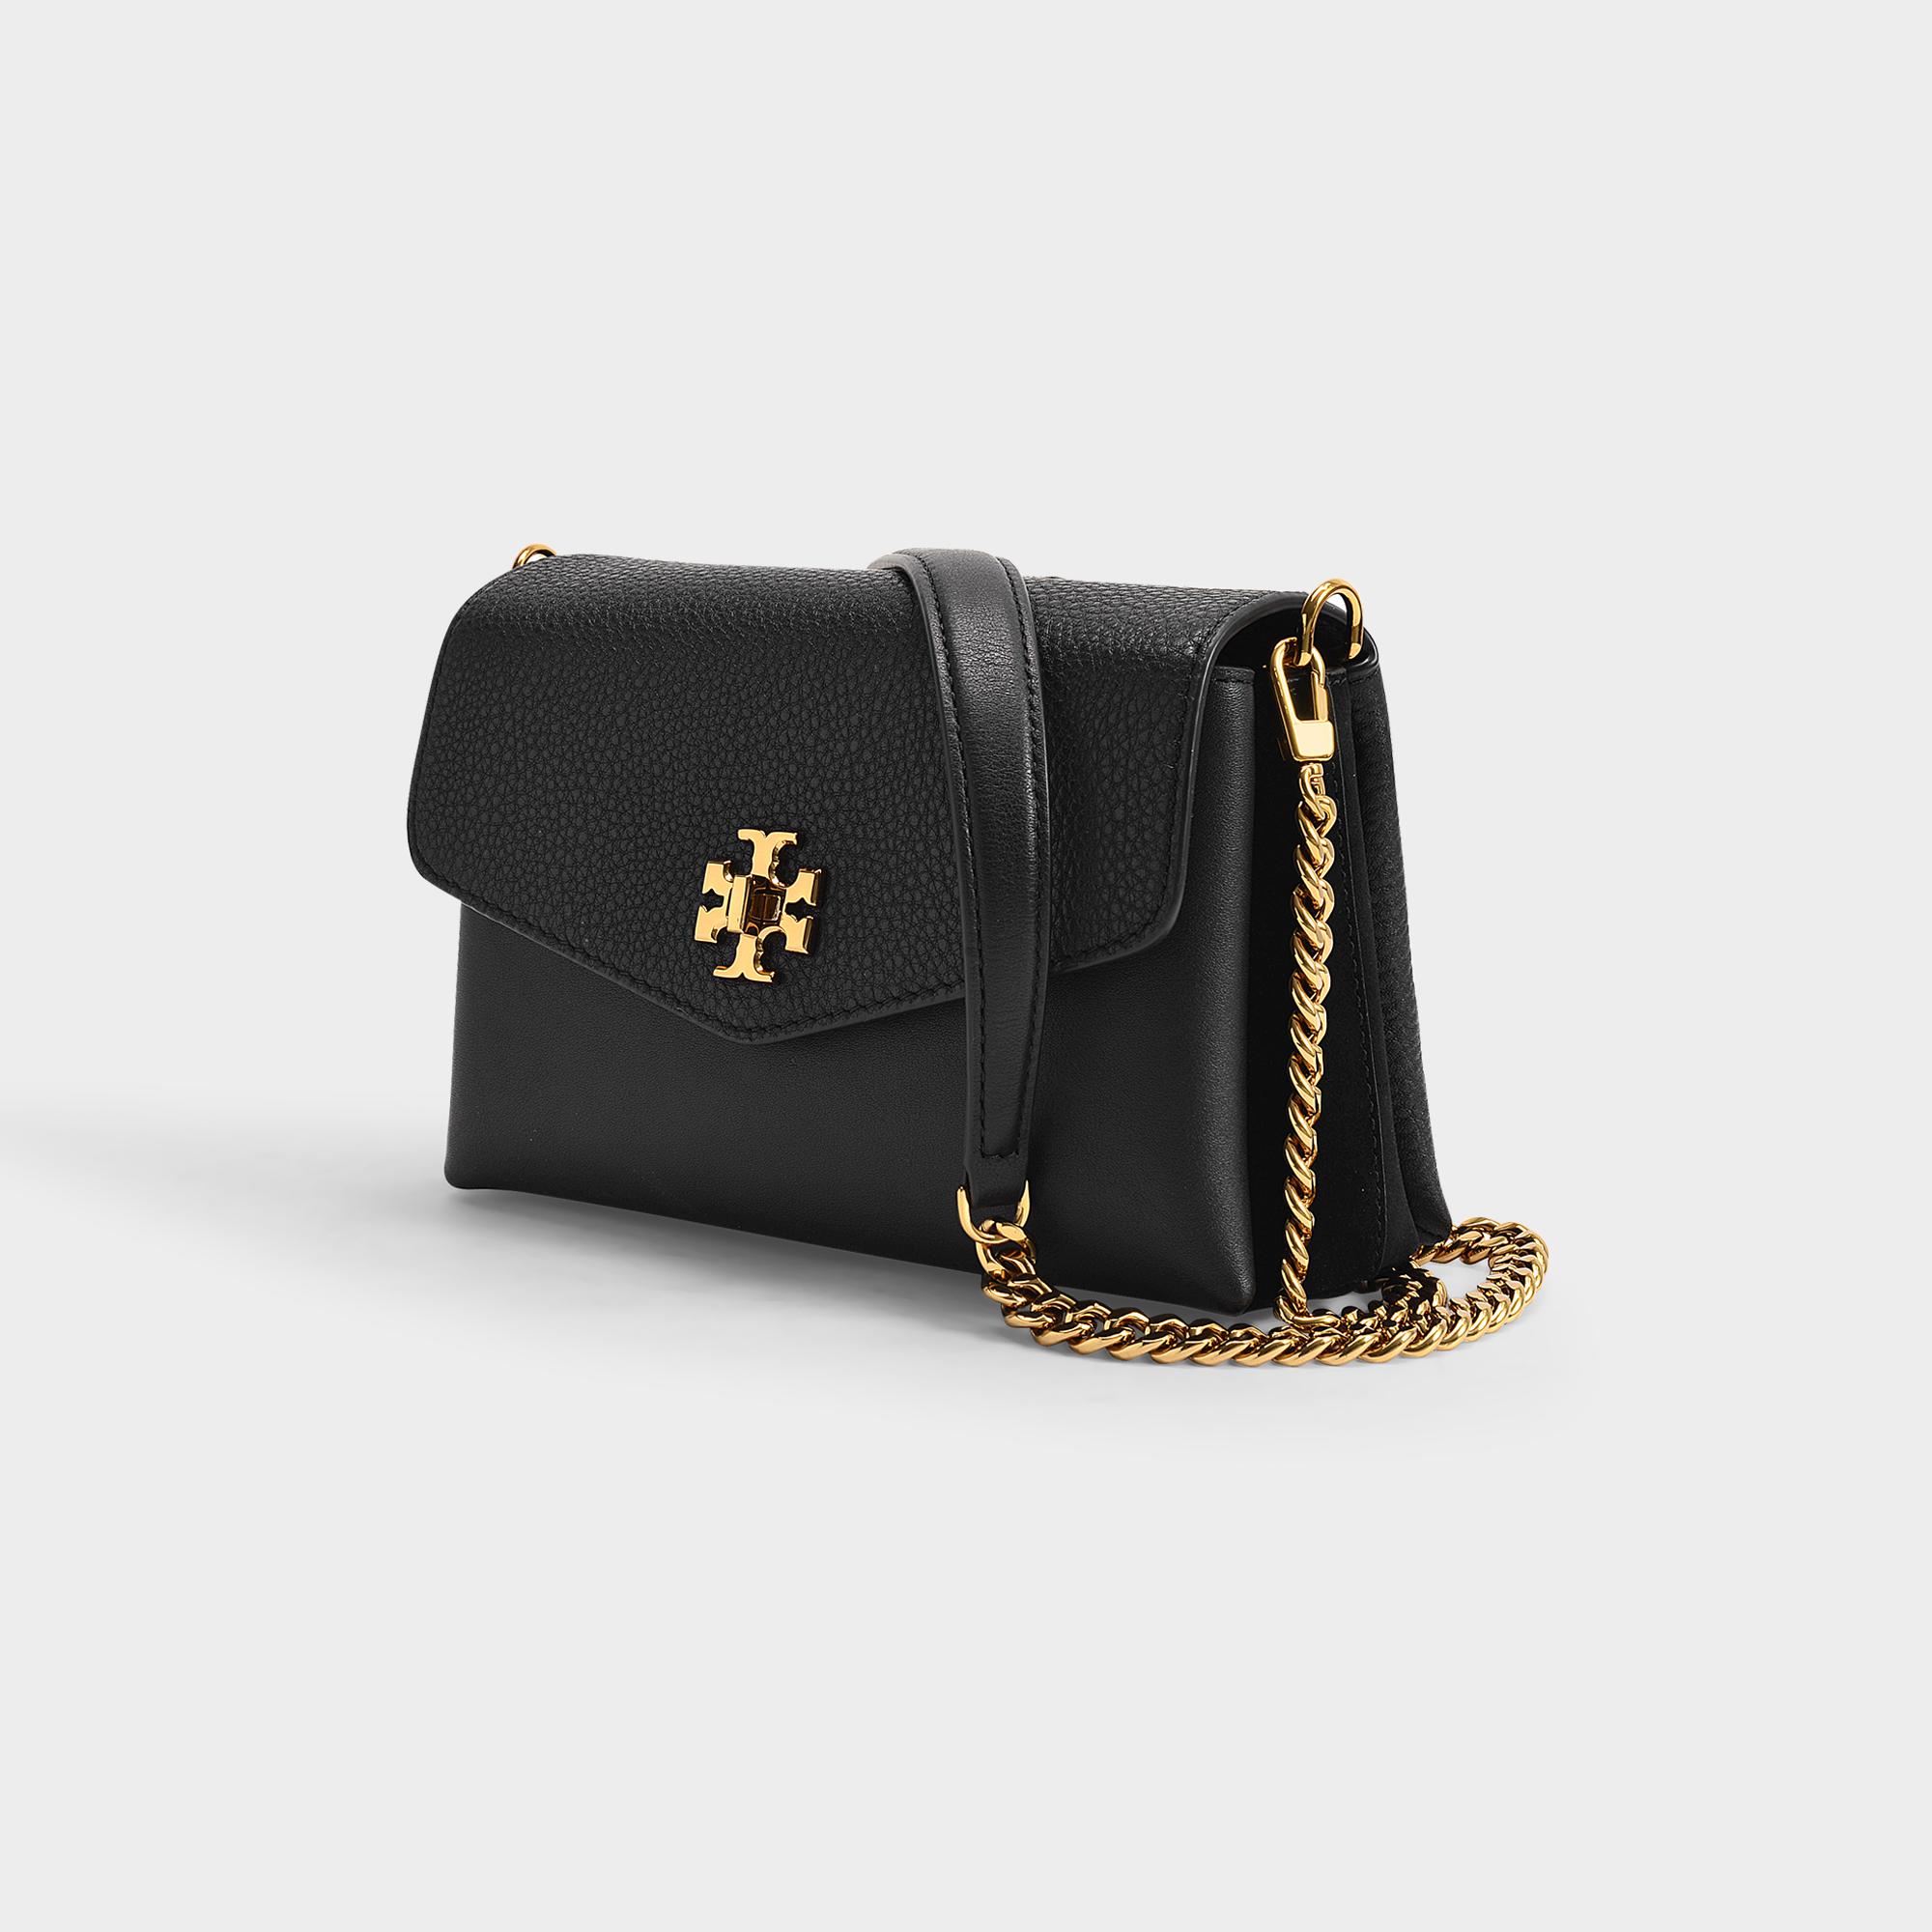 Tory Burch Leather Mini Kira Bag in Black,Gold Tone (Black) - Lyst